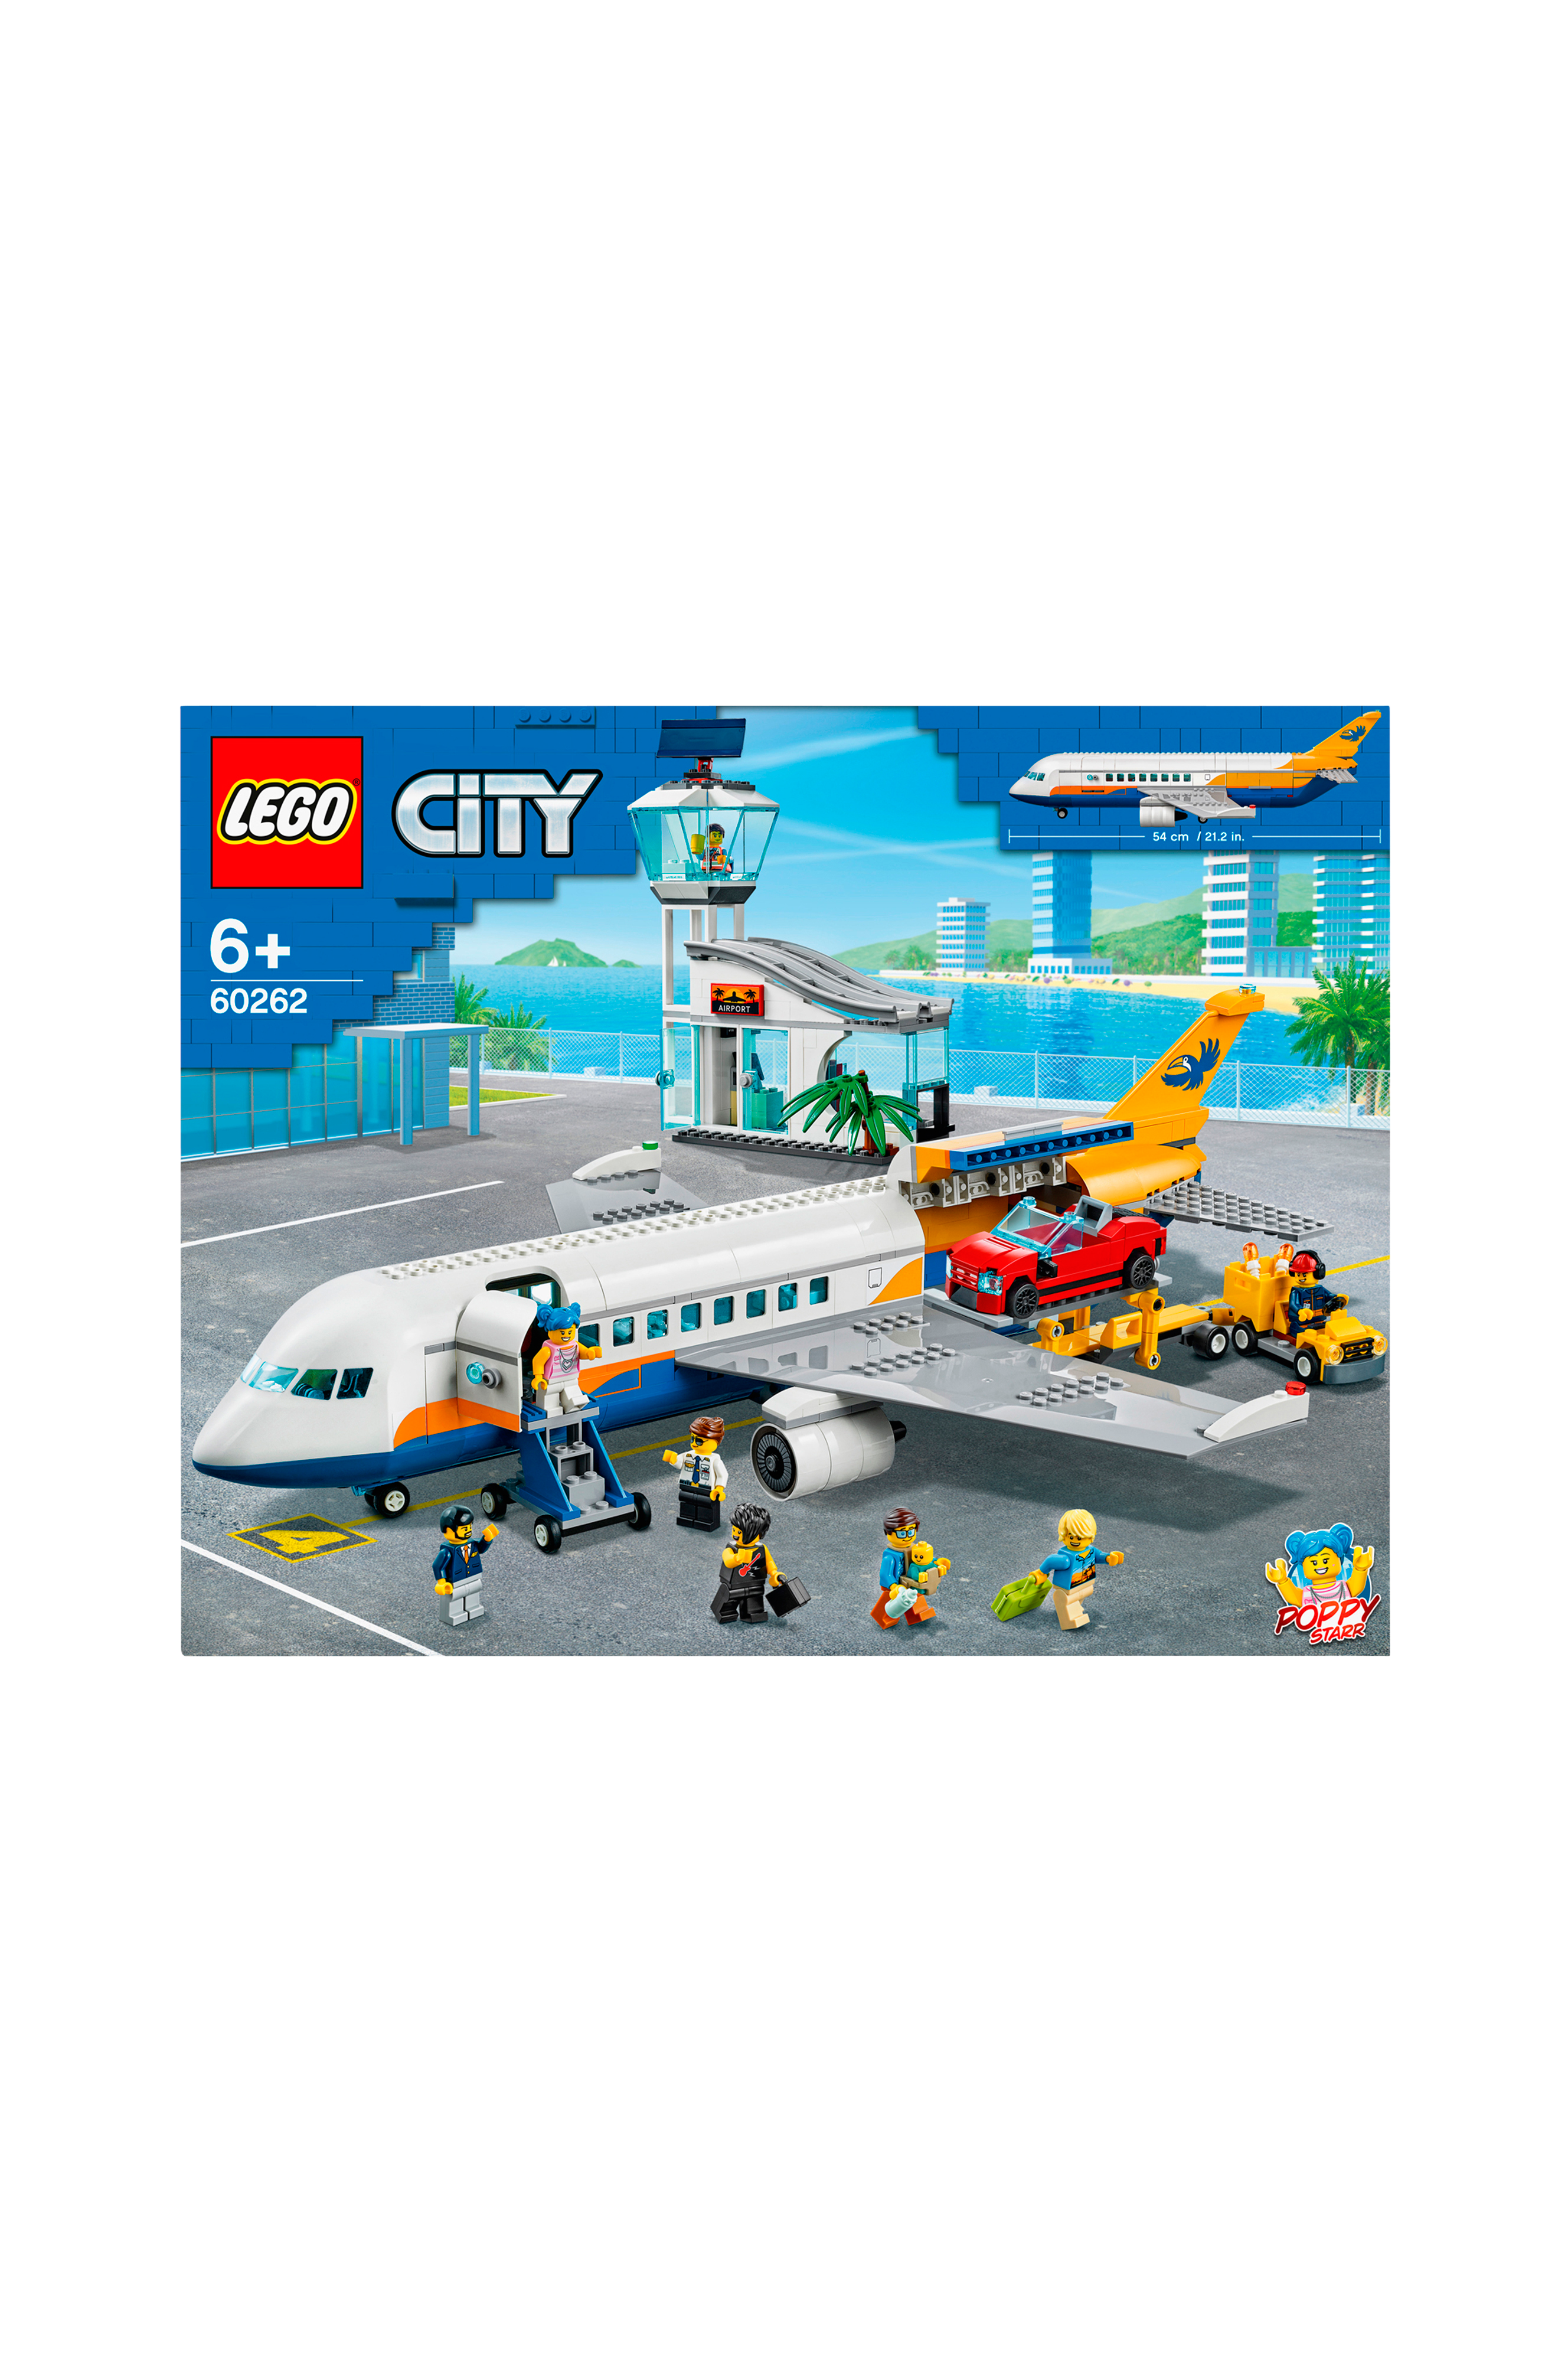 City City Airport - - Lego |